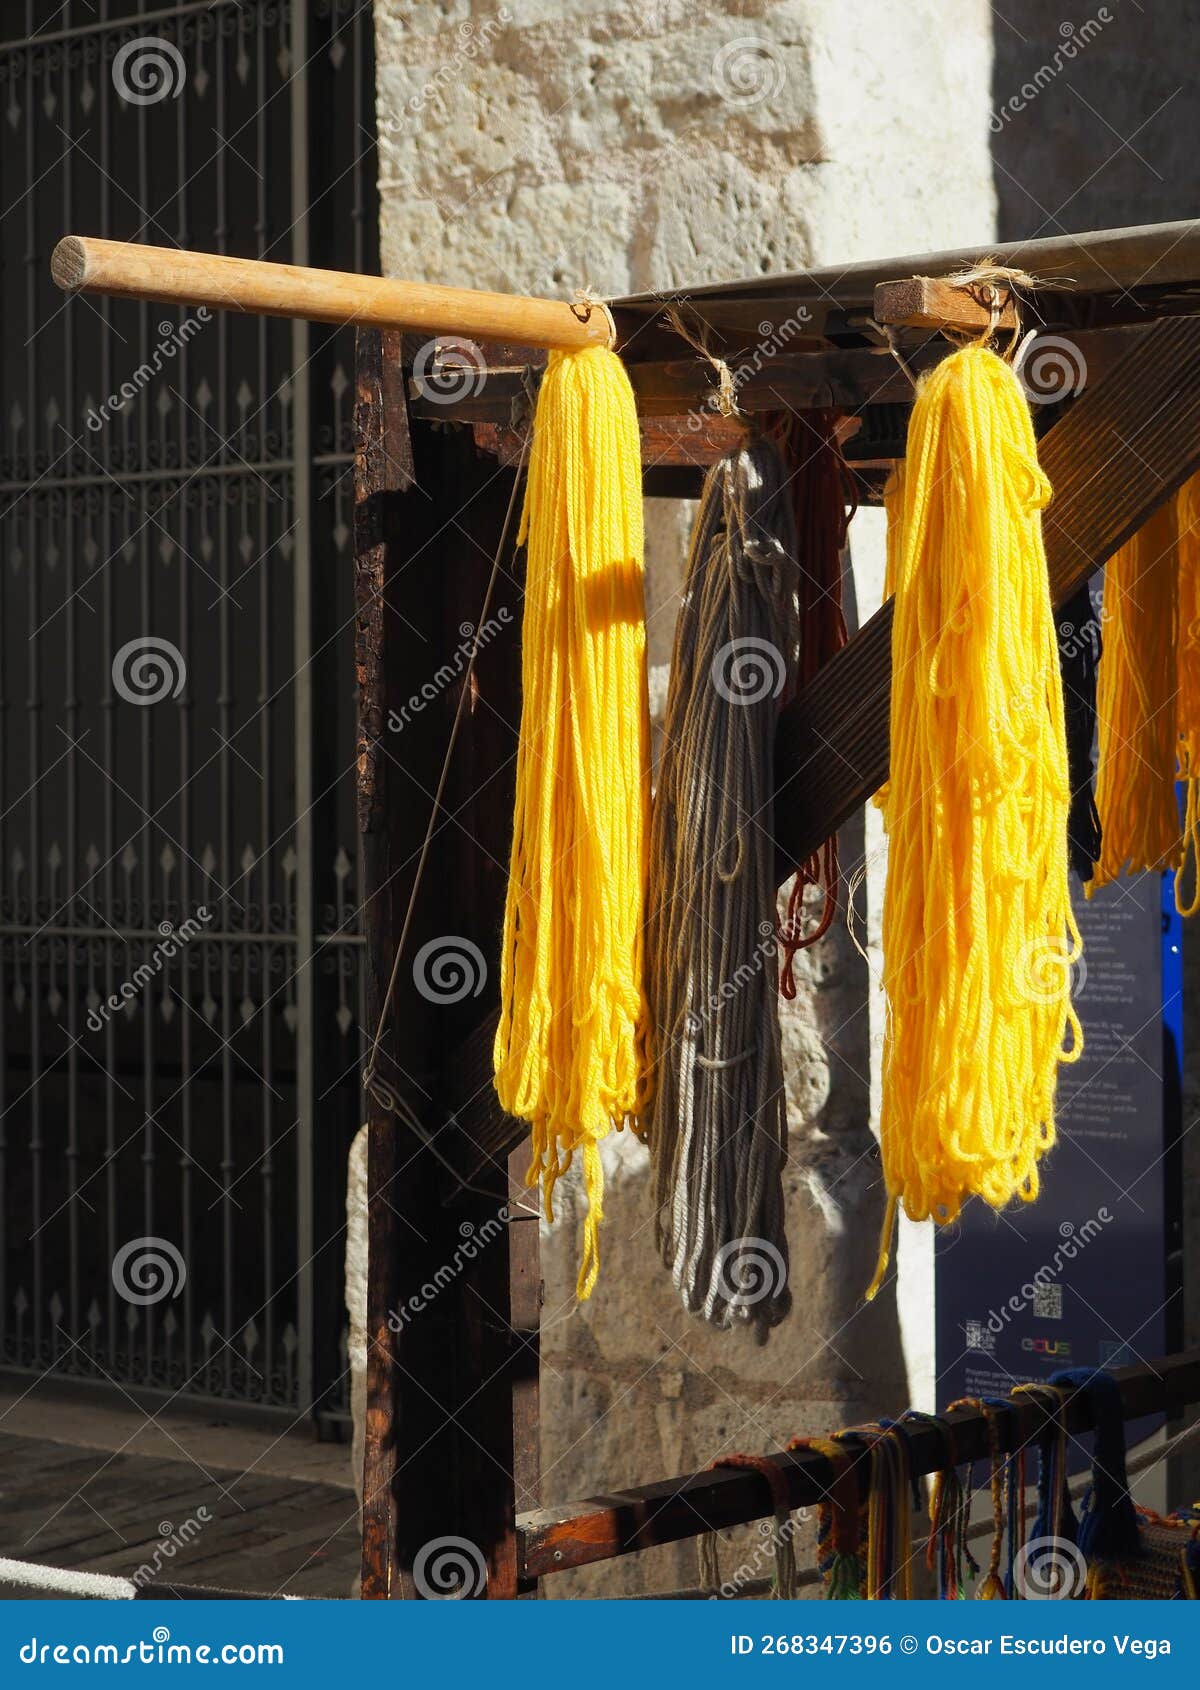 yellow wool